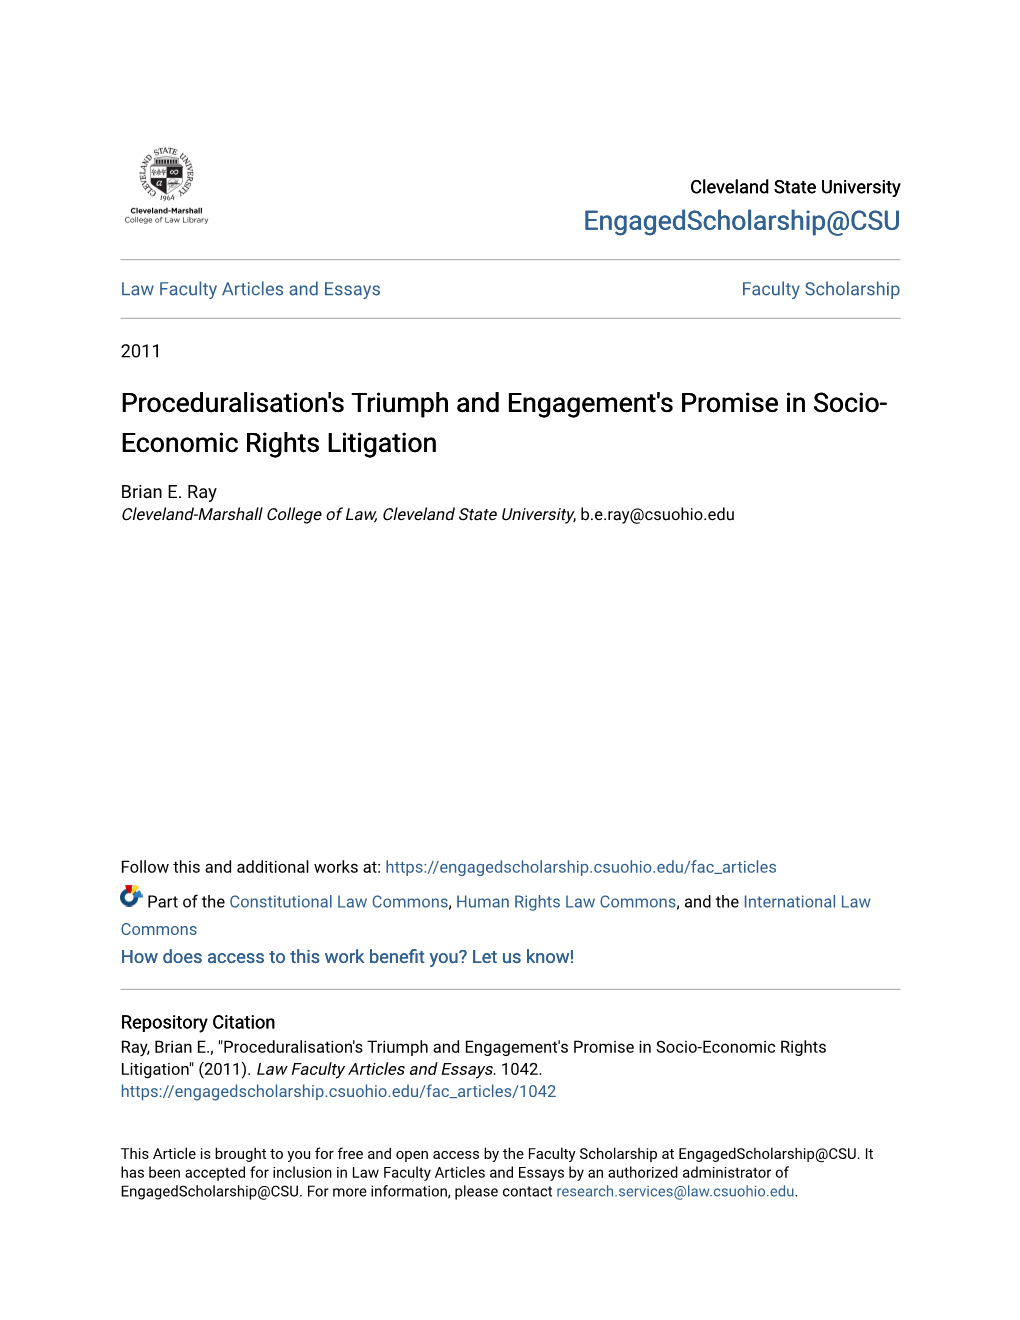 Proceduralisation's Triumph and Engagement's Promise in Socio-Economic Rights Litigation" (2011)